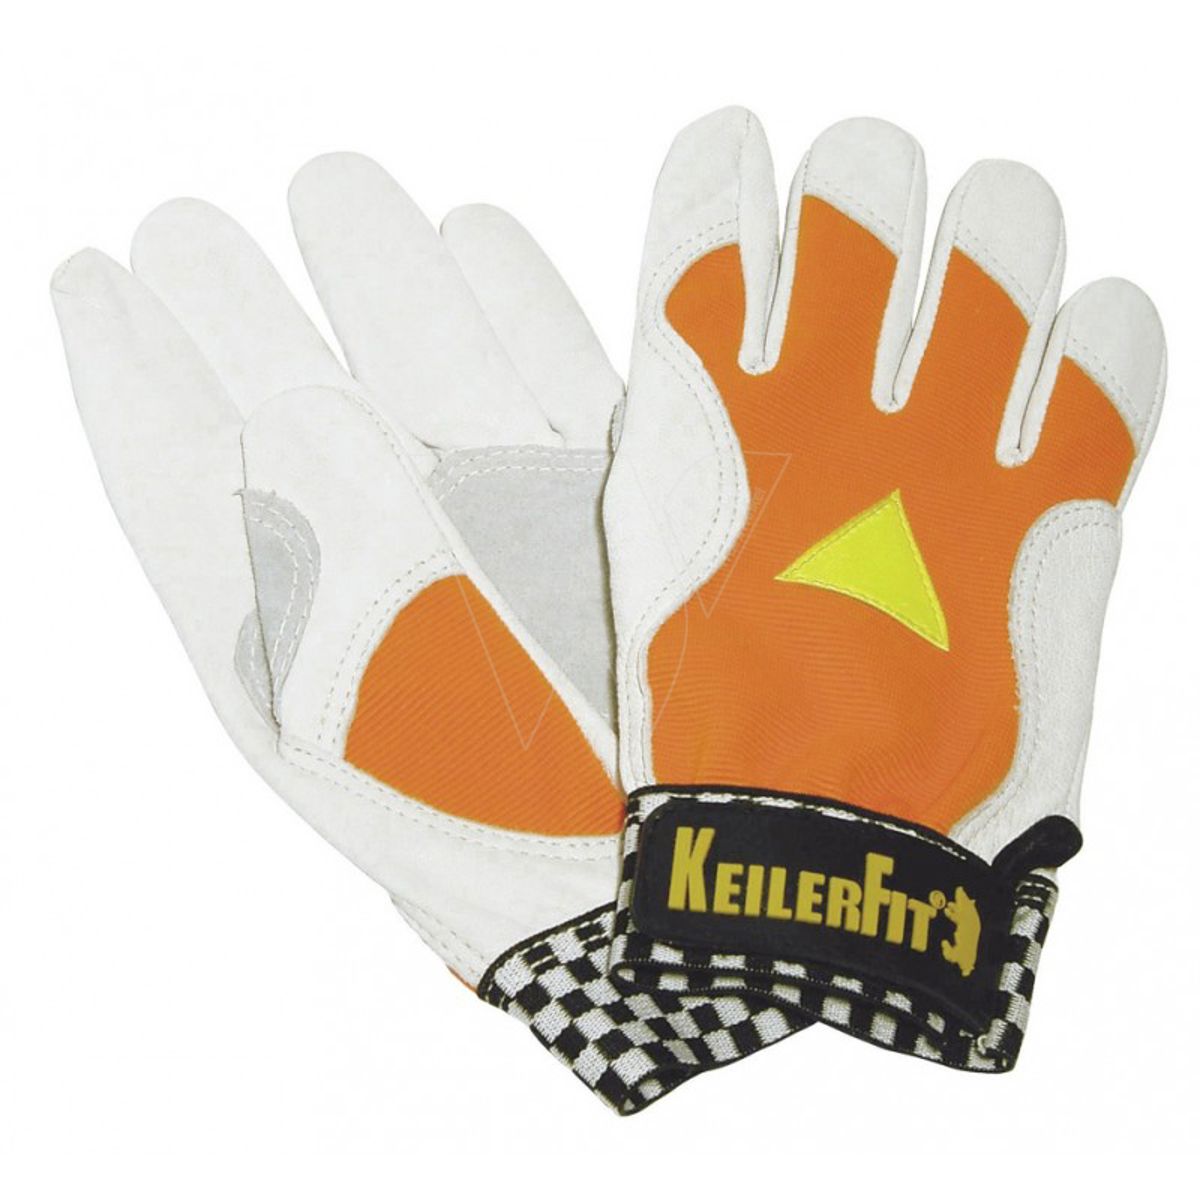 Keilerfit work glove nappa leather 8